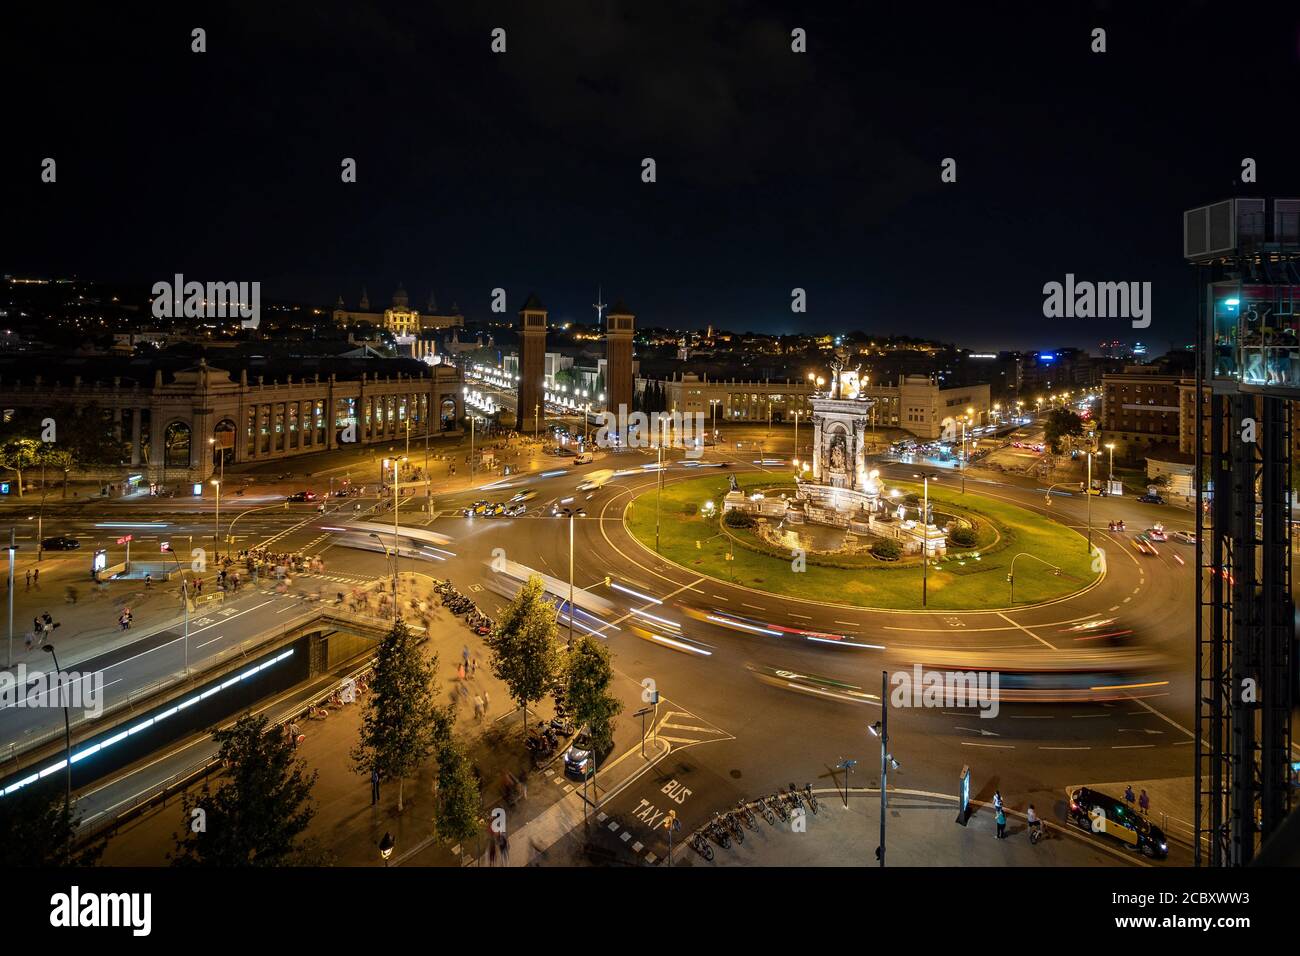 Night traffic around Plaza de Espana historical square in Barcelona, Catalunya, Spain. Stock Photo